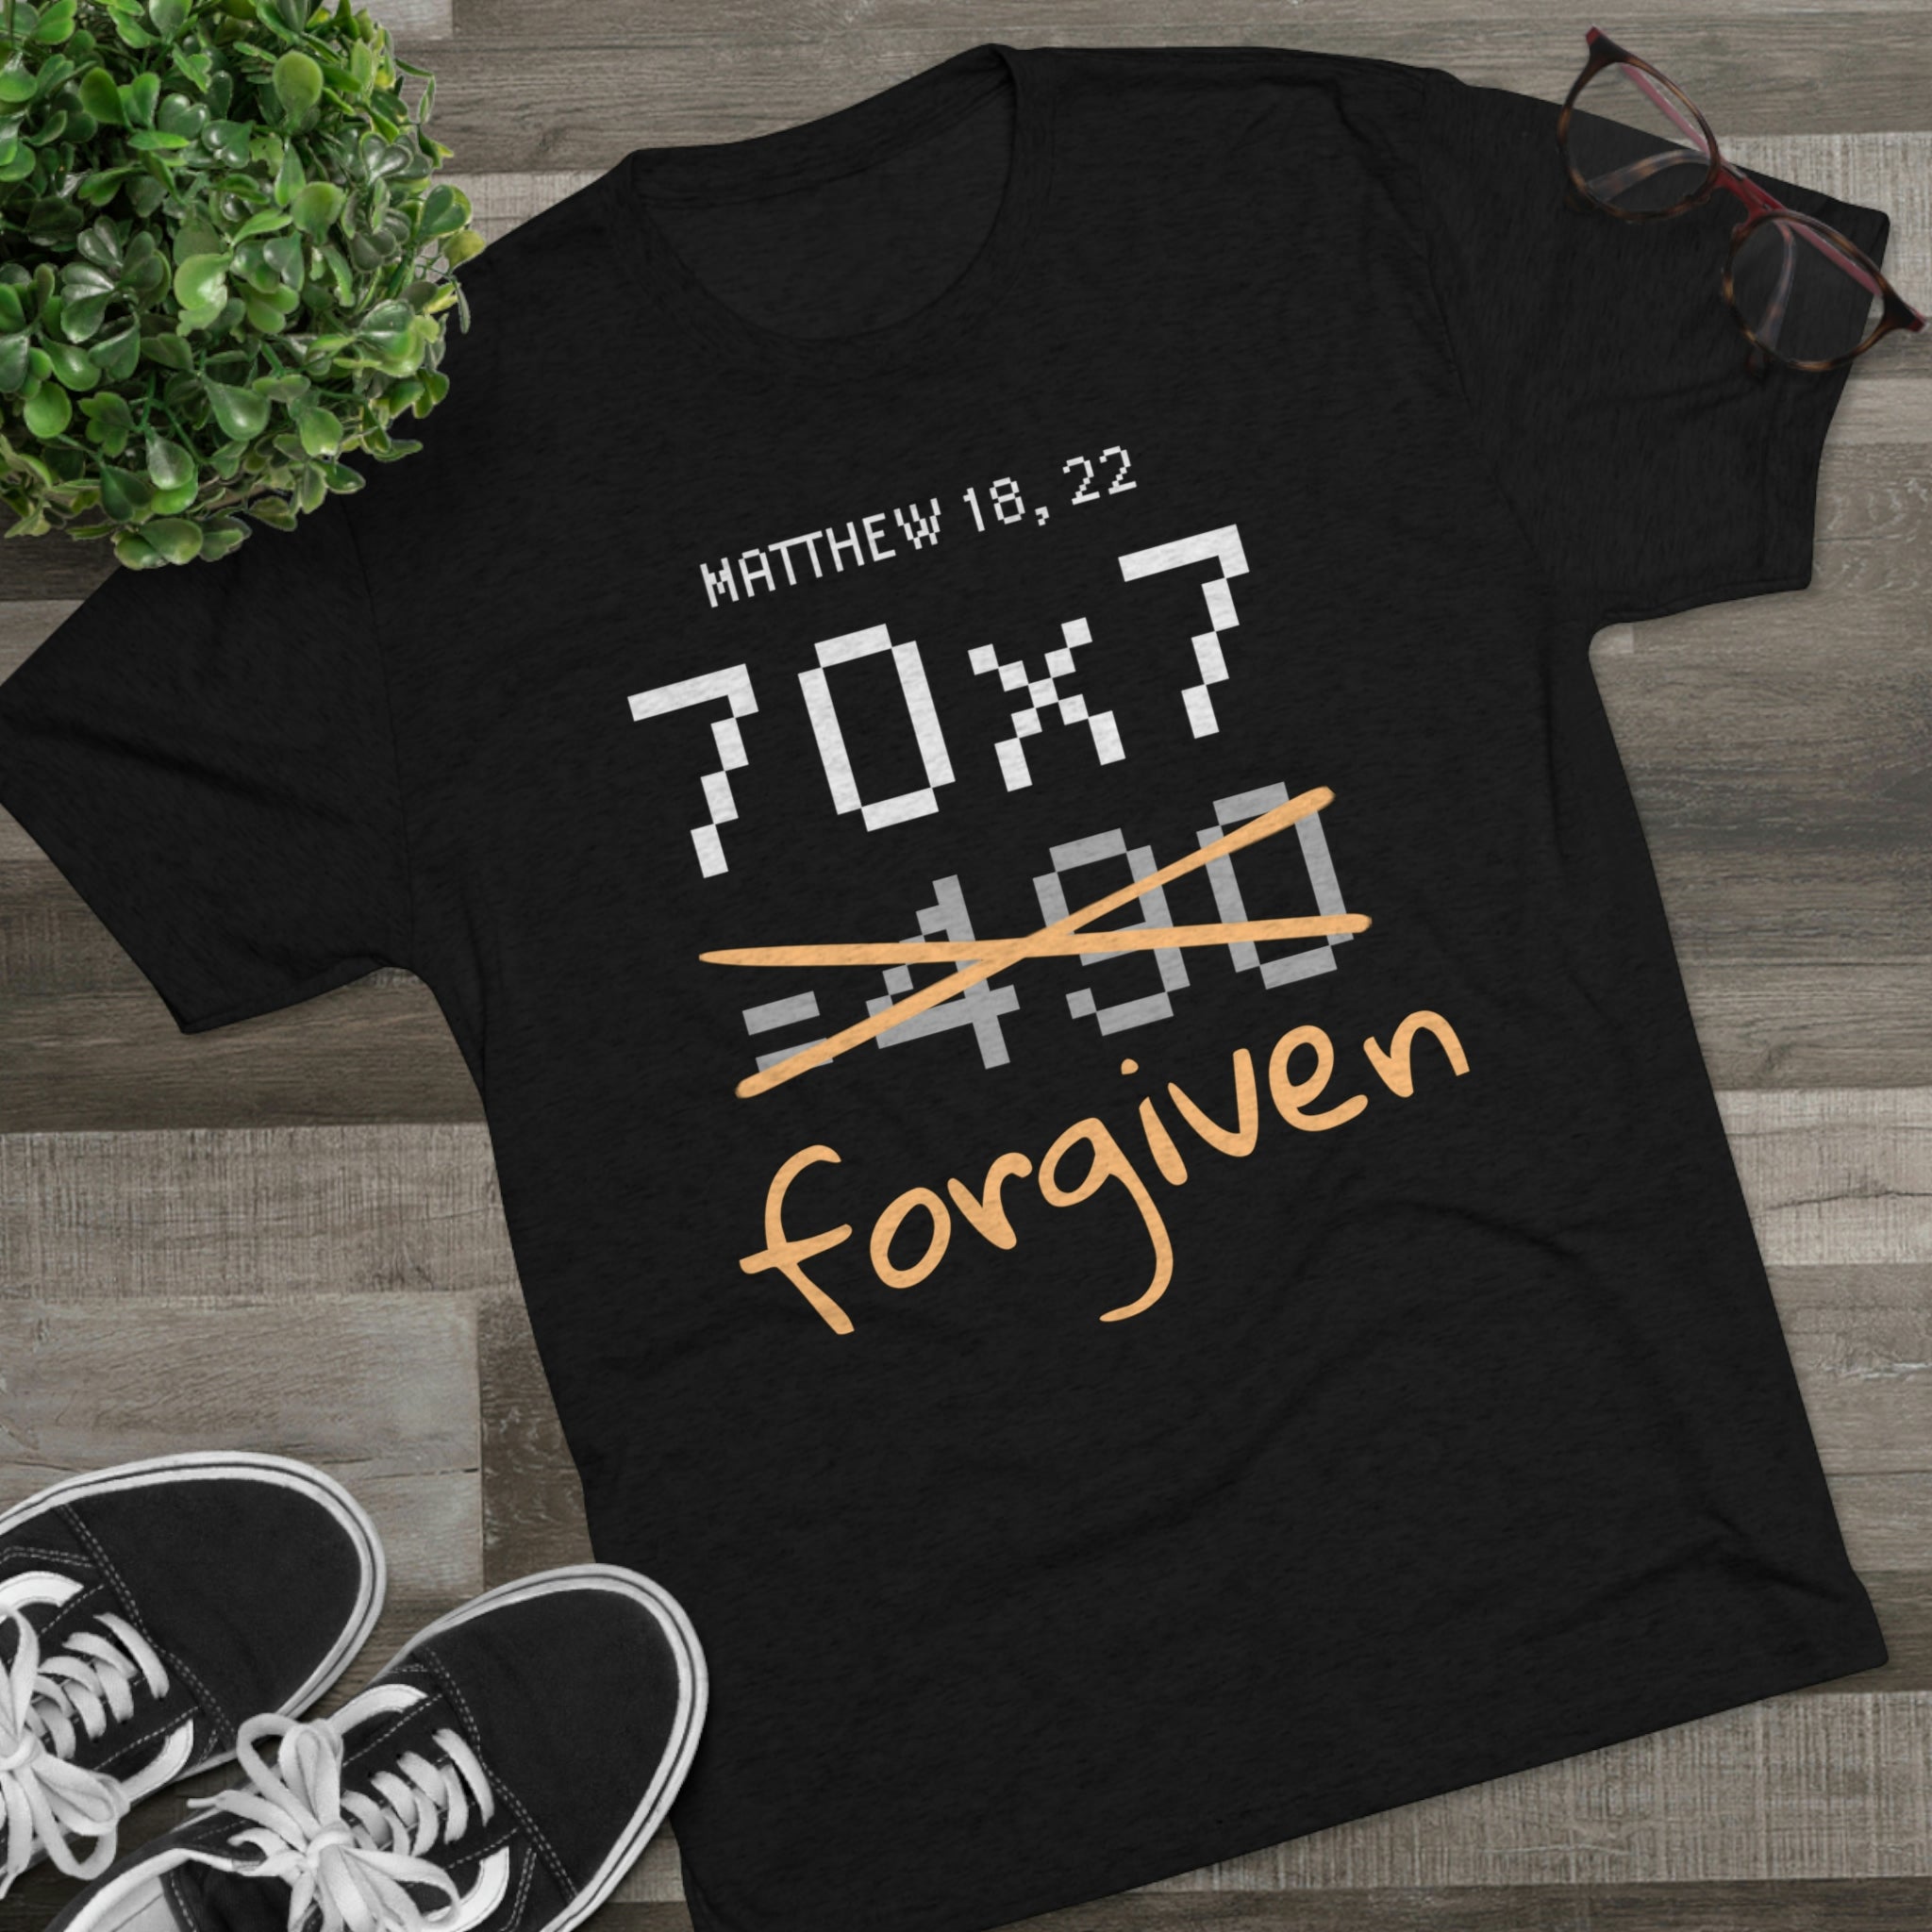 Men's Forgiven Premium T-shirt